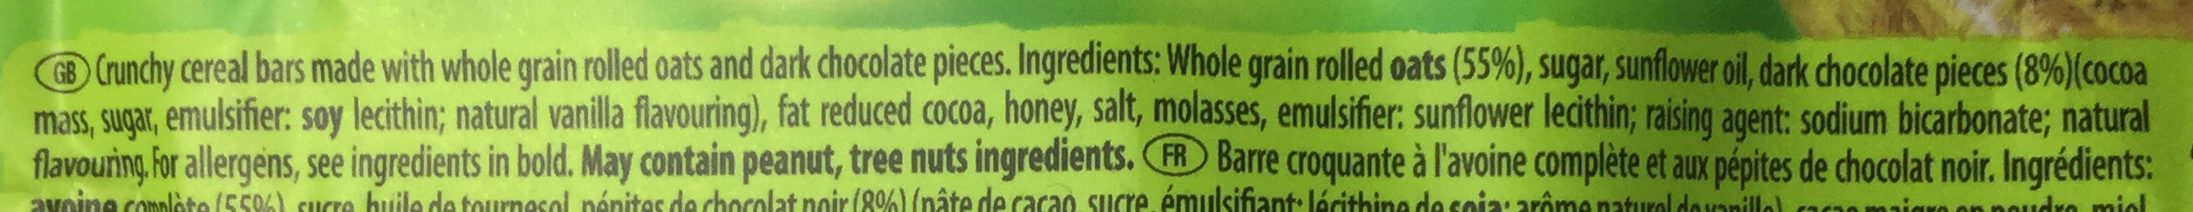 Crunchy - Ingredients